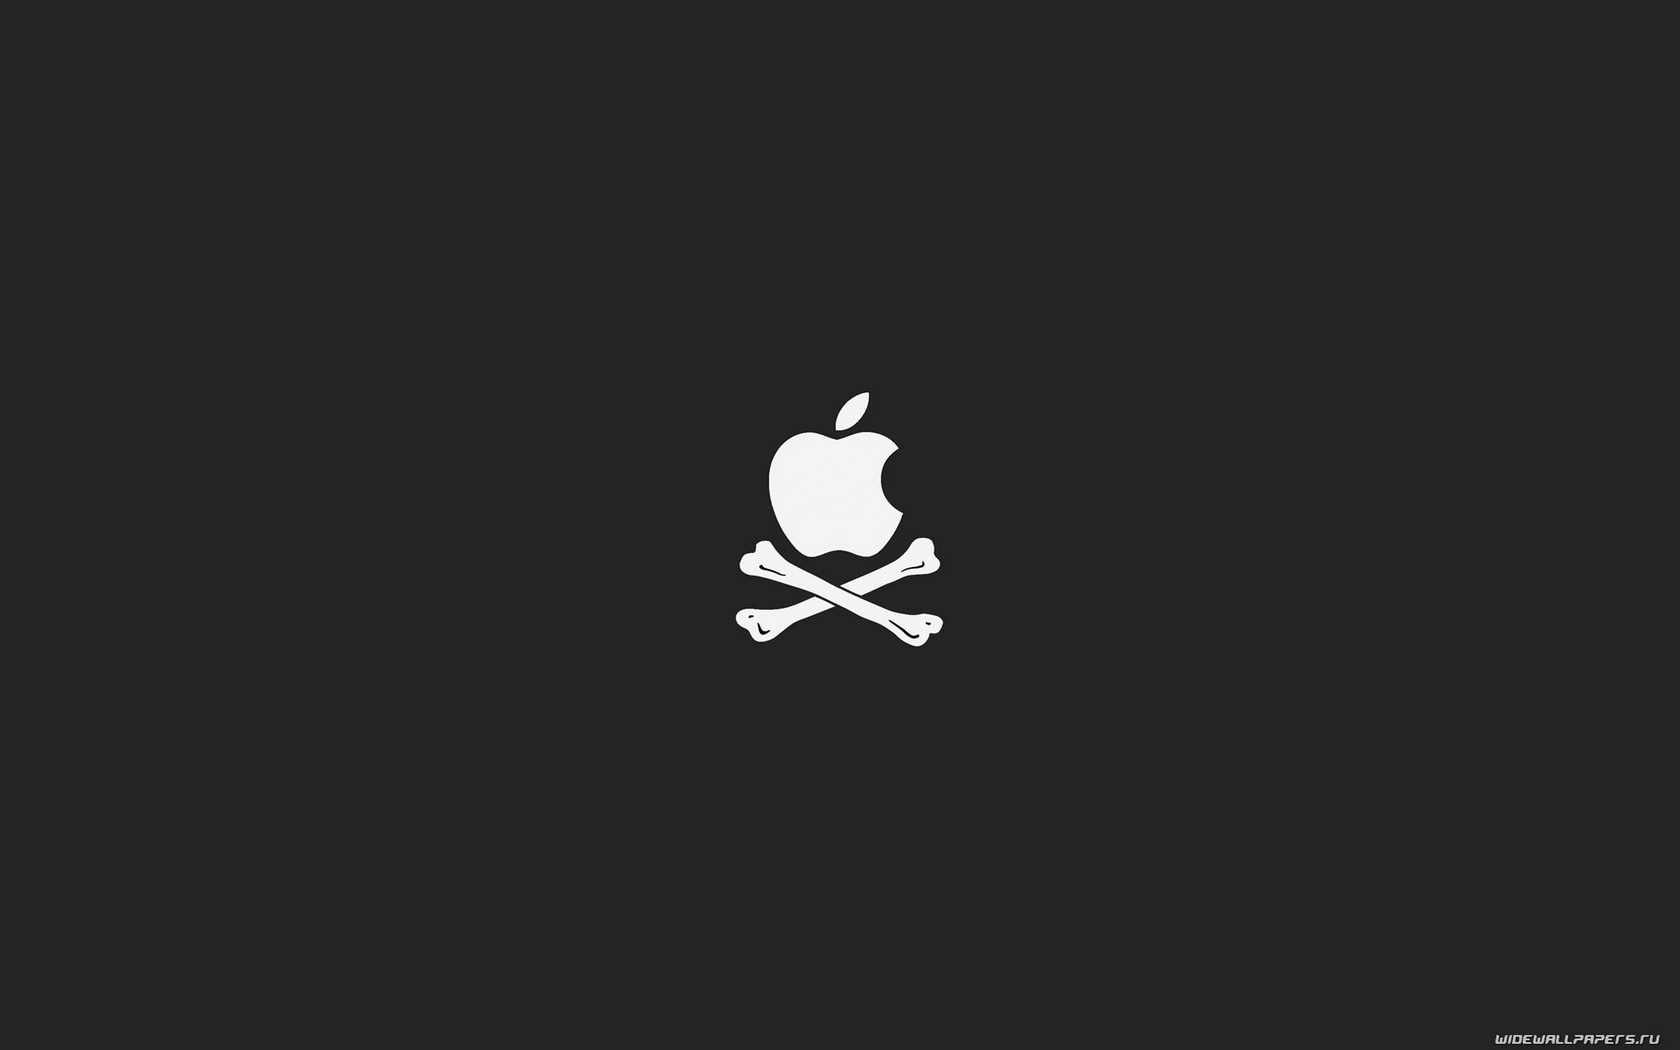 65 descargar imagen divertido, marcas, negro, logos, manzana, piratas: fondos de pantalla y protectores de pantalla gratis